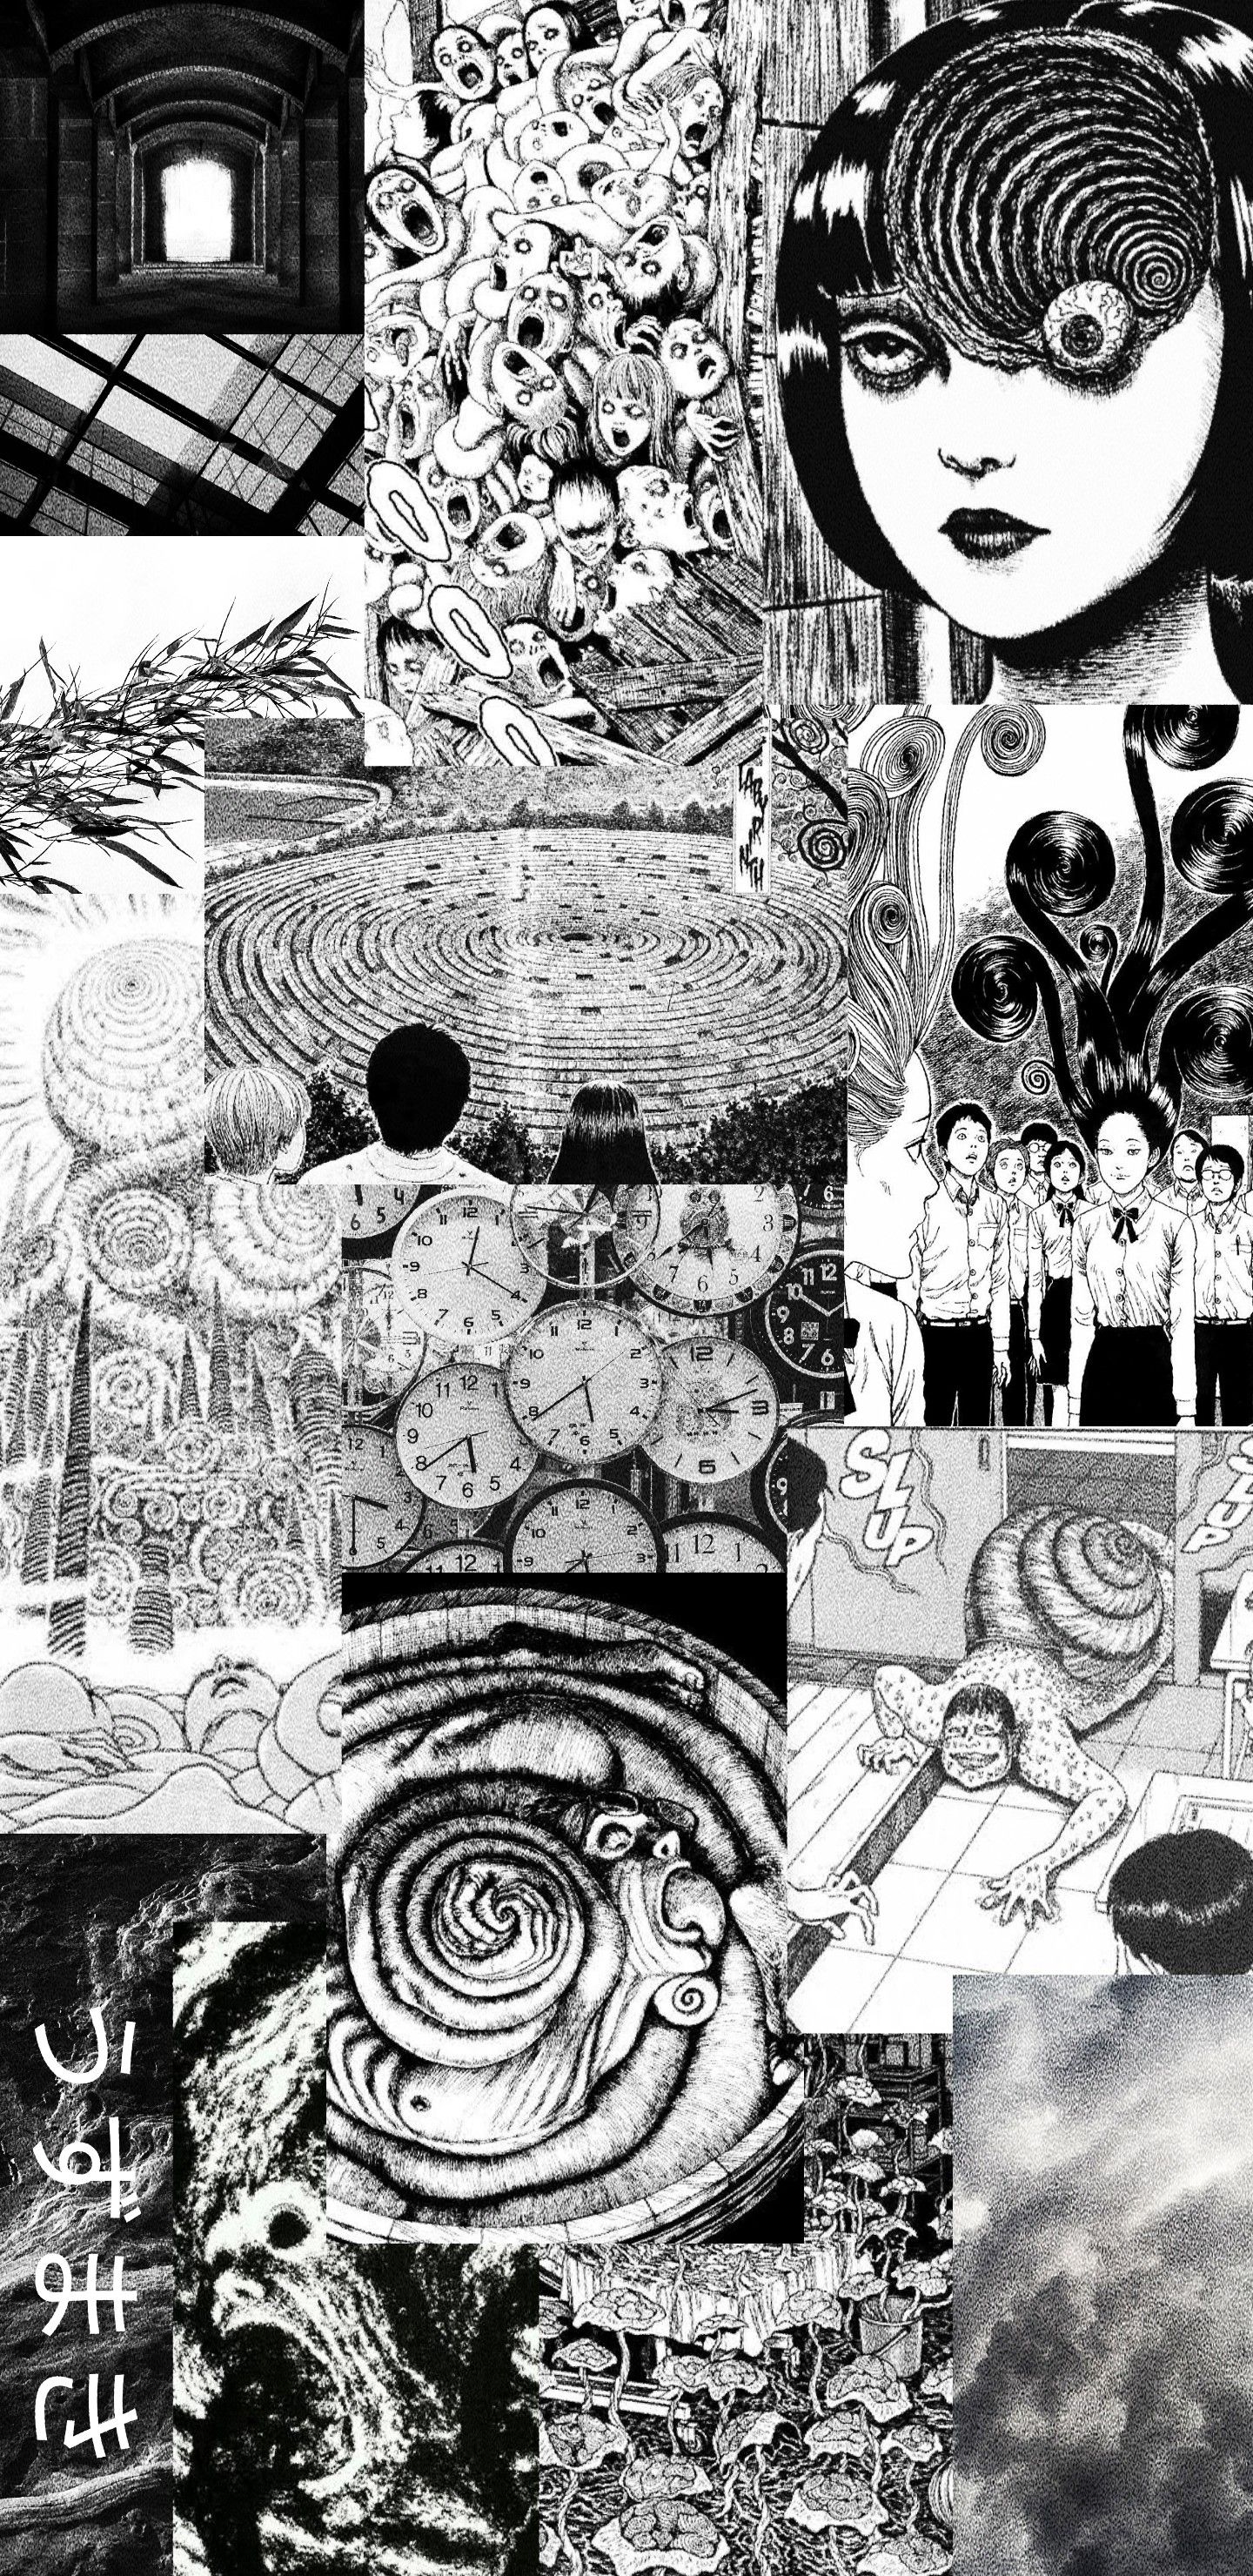 Uzumaki Junji Ito Wallpapers - Wallpaper Cave